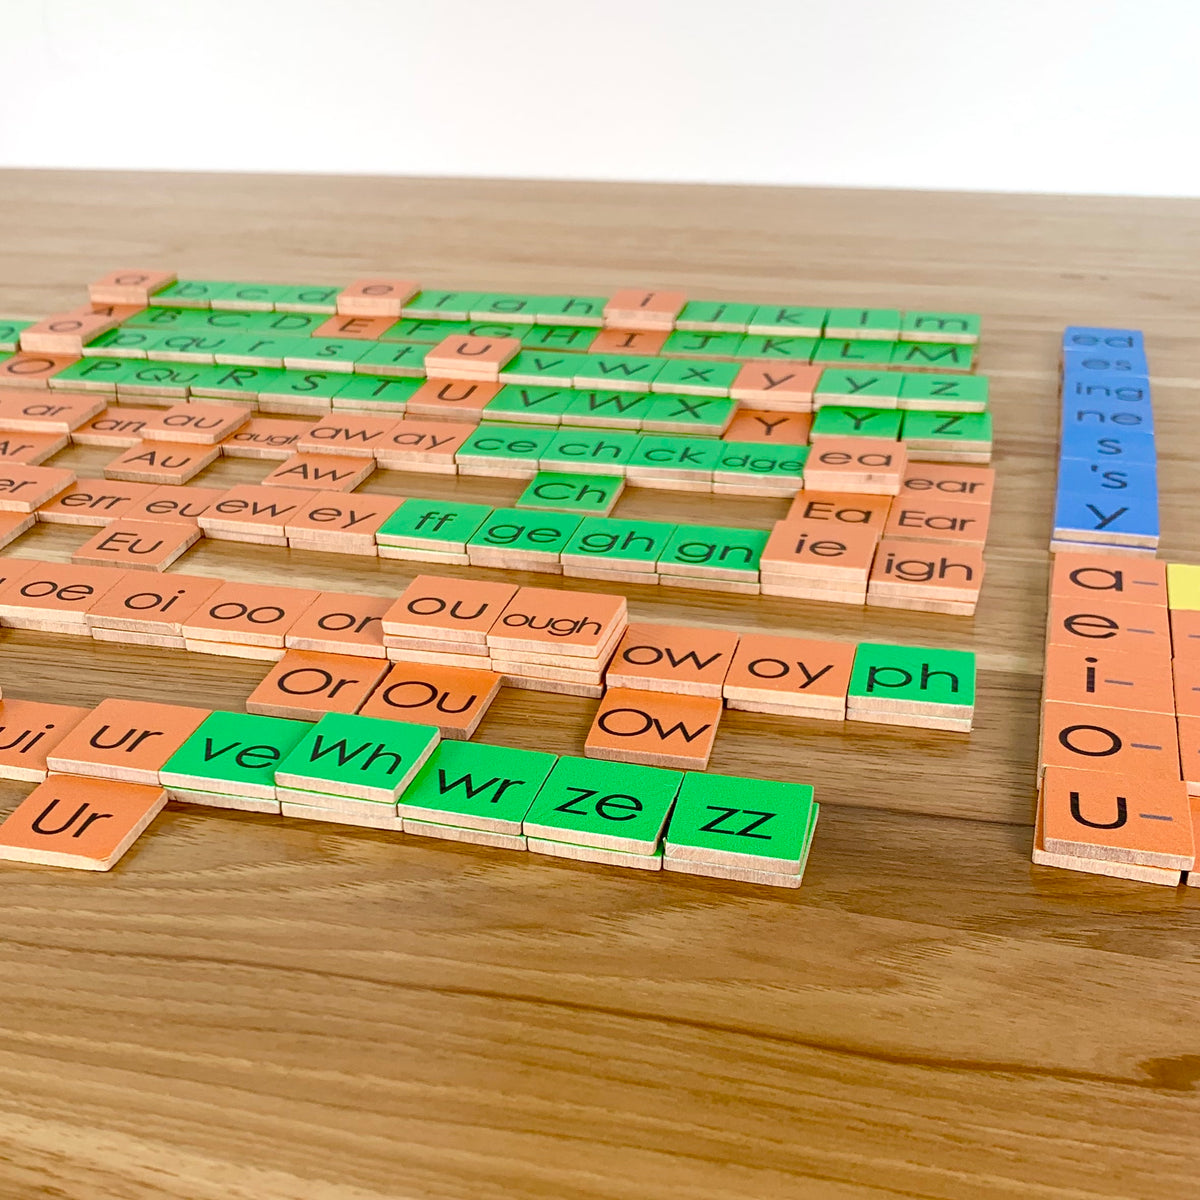 Justice Scrabble Tiles - 100 Scrabble Tiles - Plastic Scrabble Tiles -  Letter Tiles for Crafts - Game Pieces - Board Game Craft